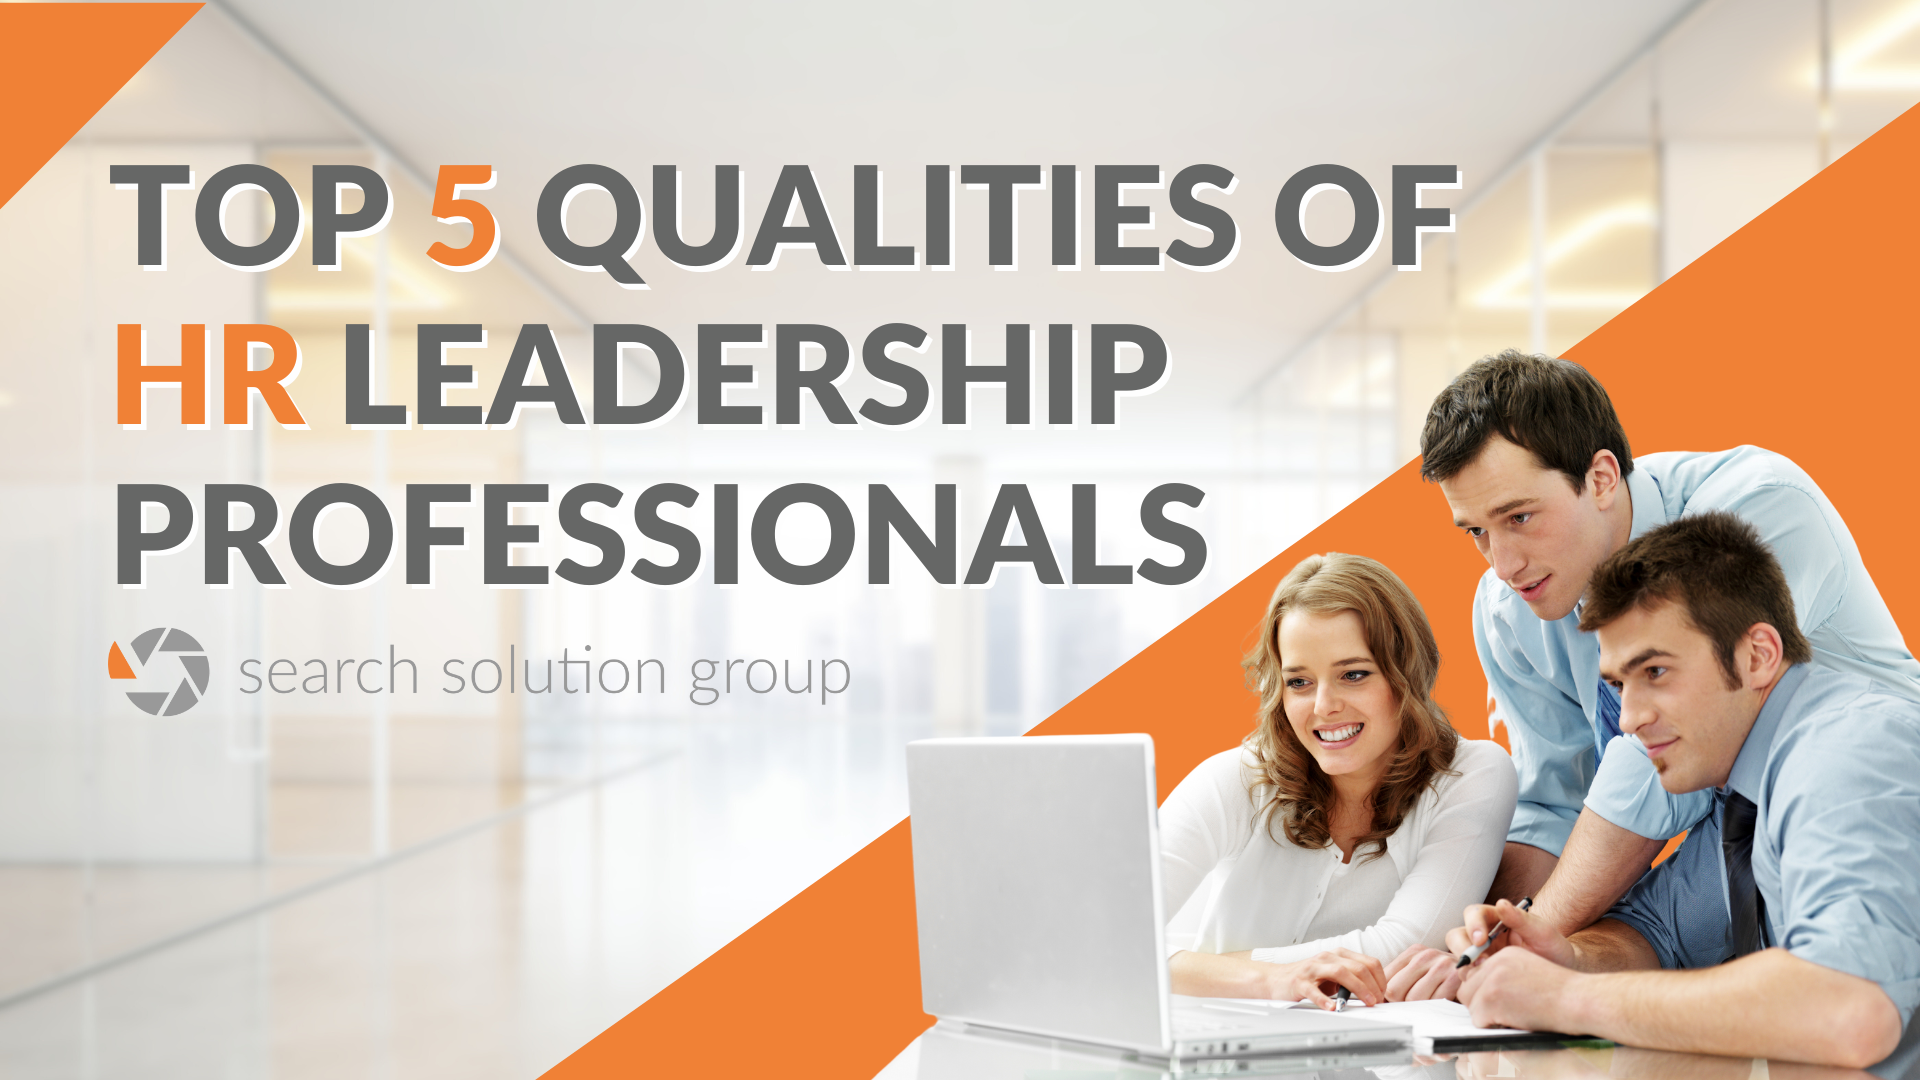 Top 5 Qualities of HR Leadership Professionals